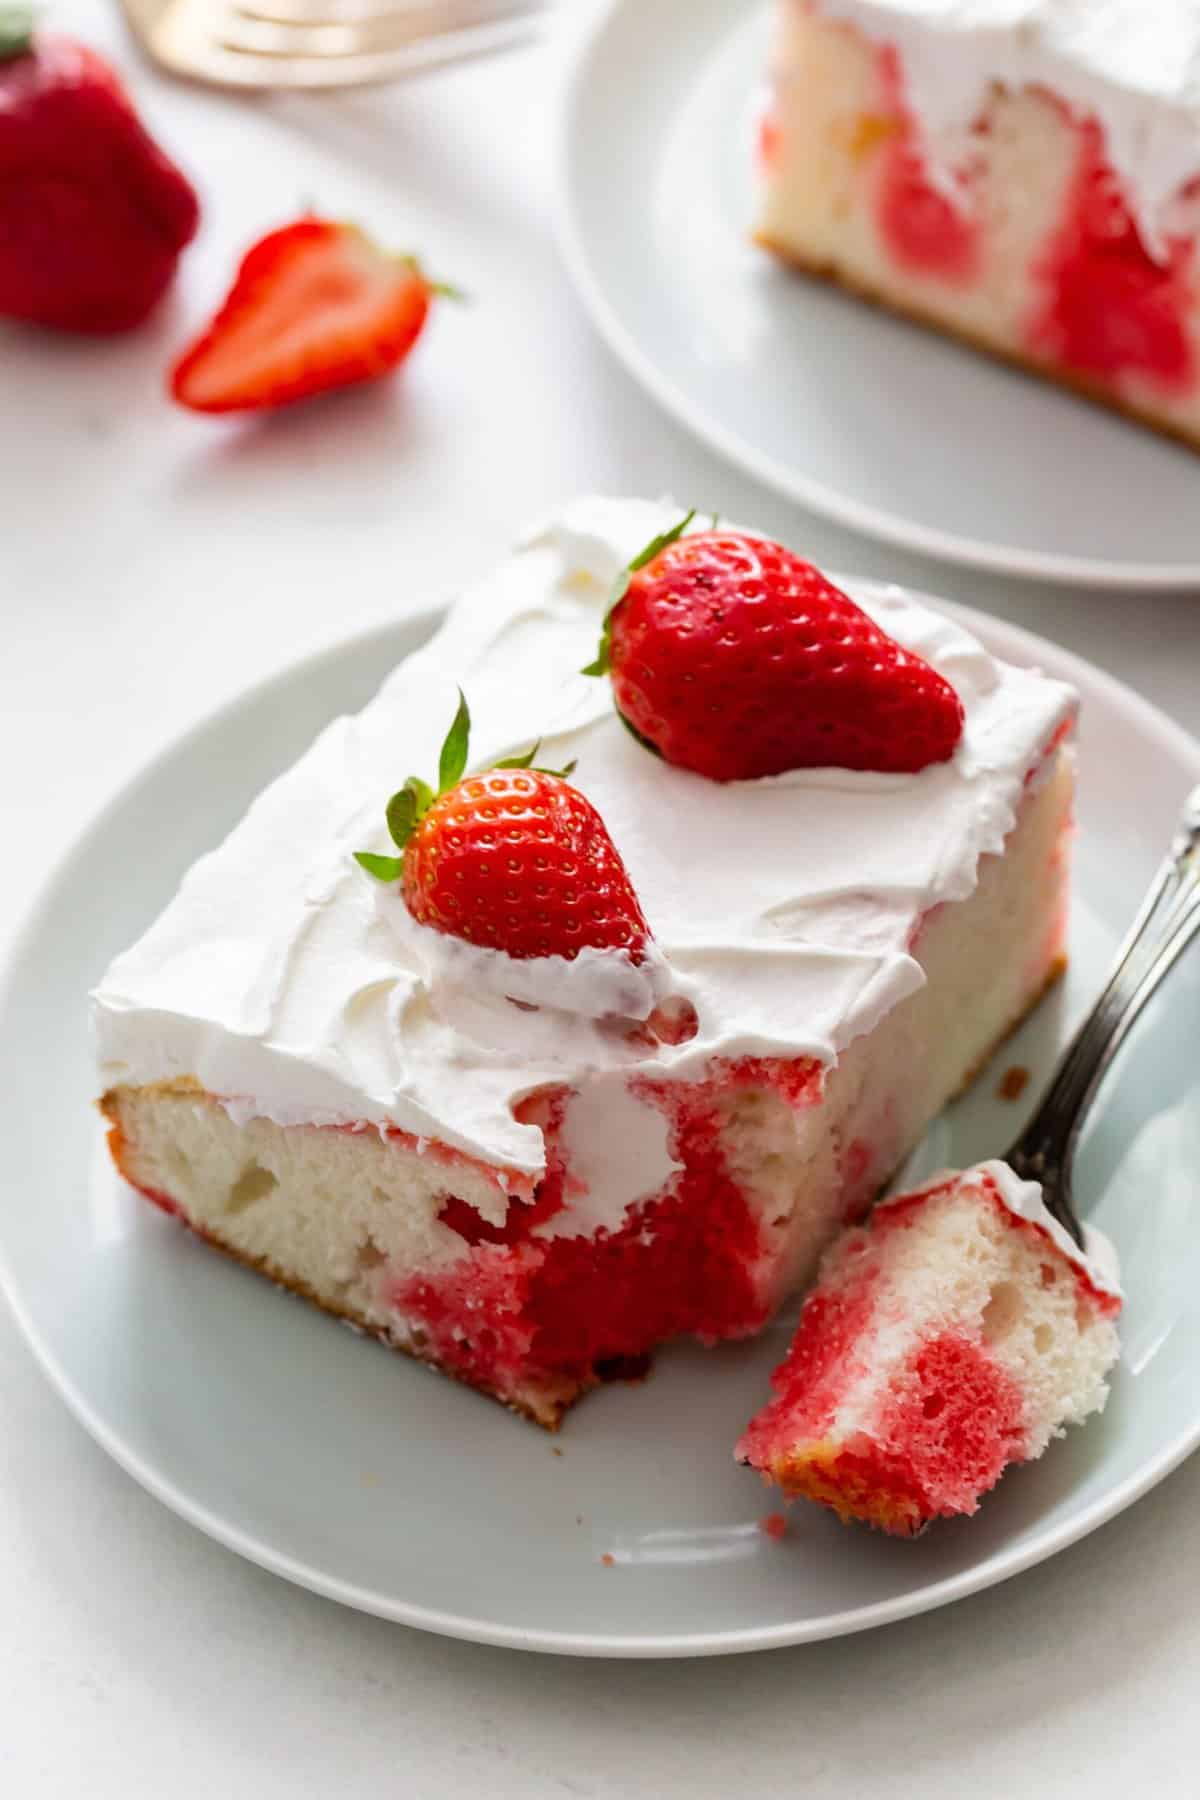 A slice of strawberry poke cake on a white plate